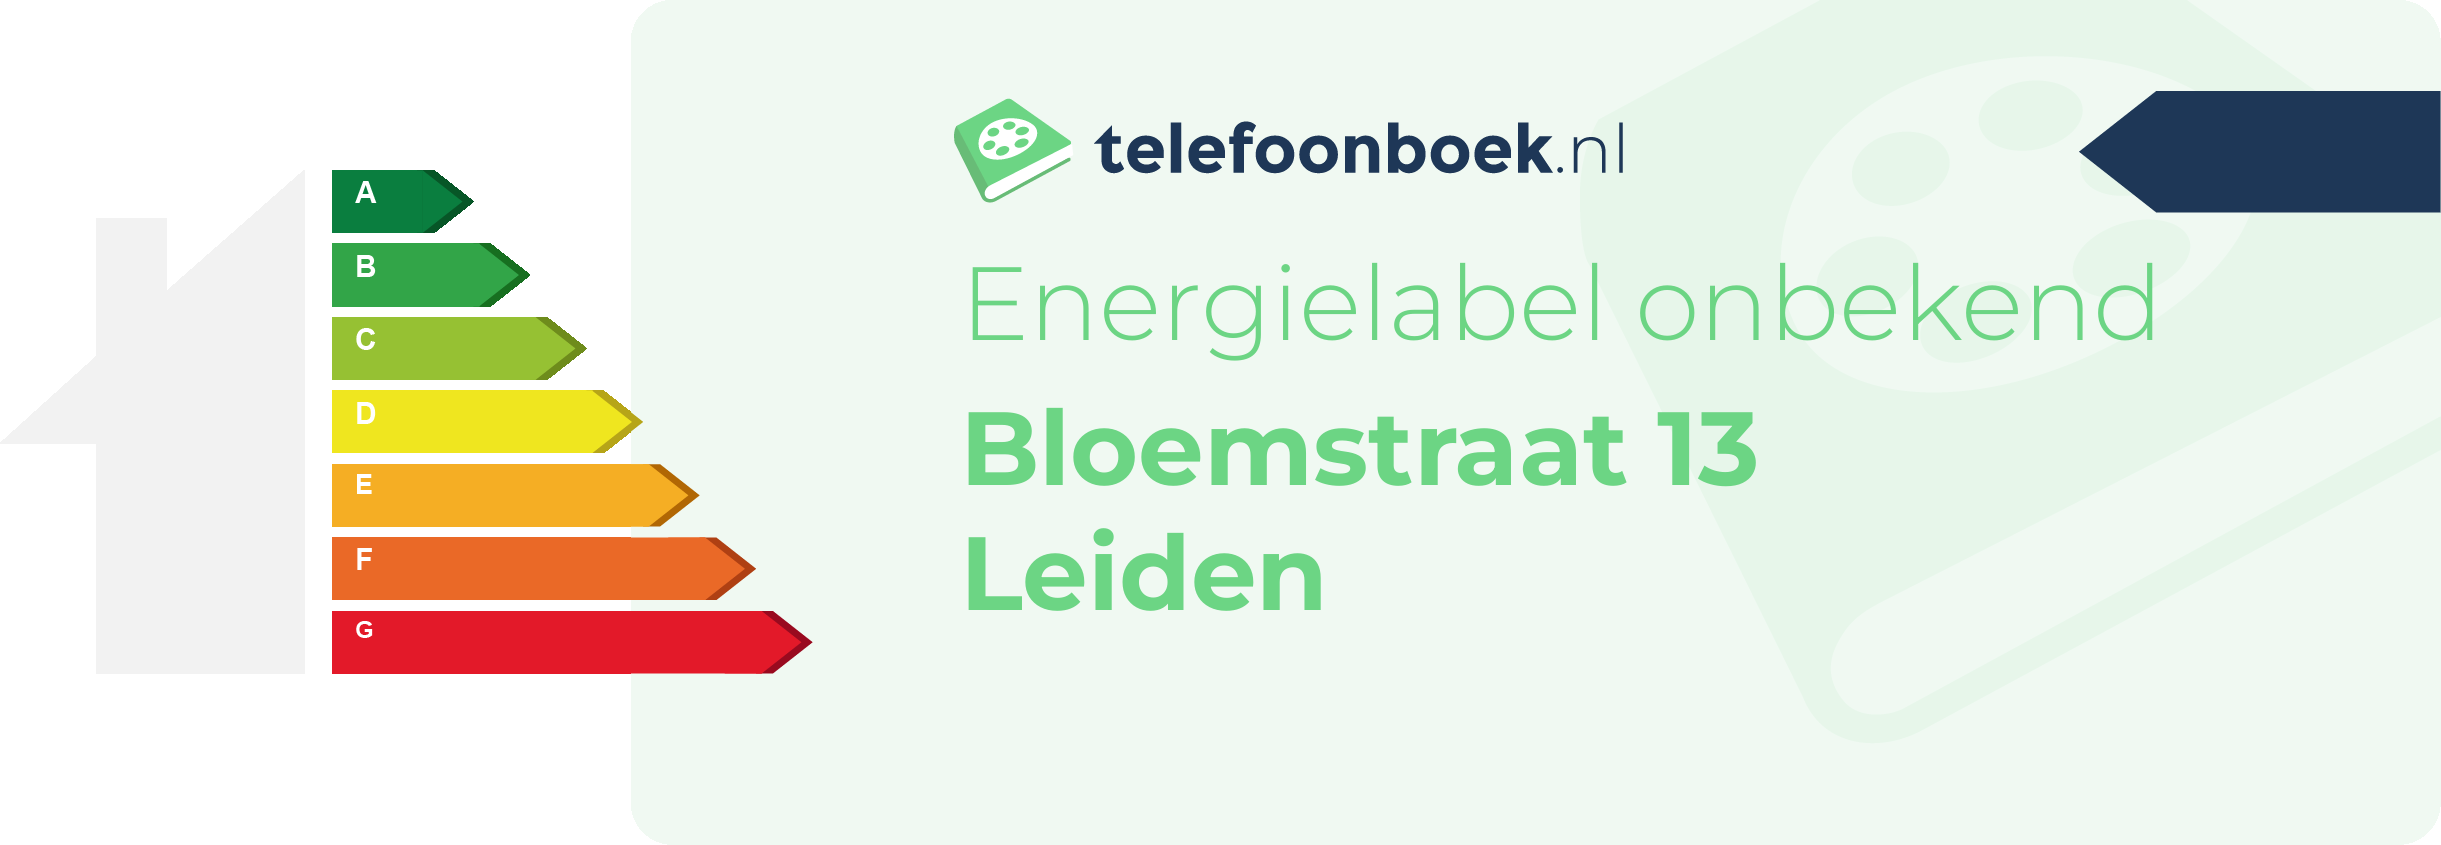 Energielabel Bloemstraat 13 Leiden